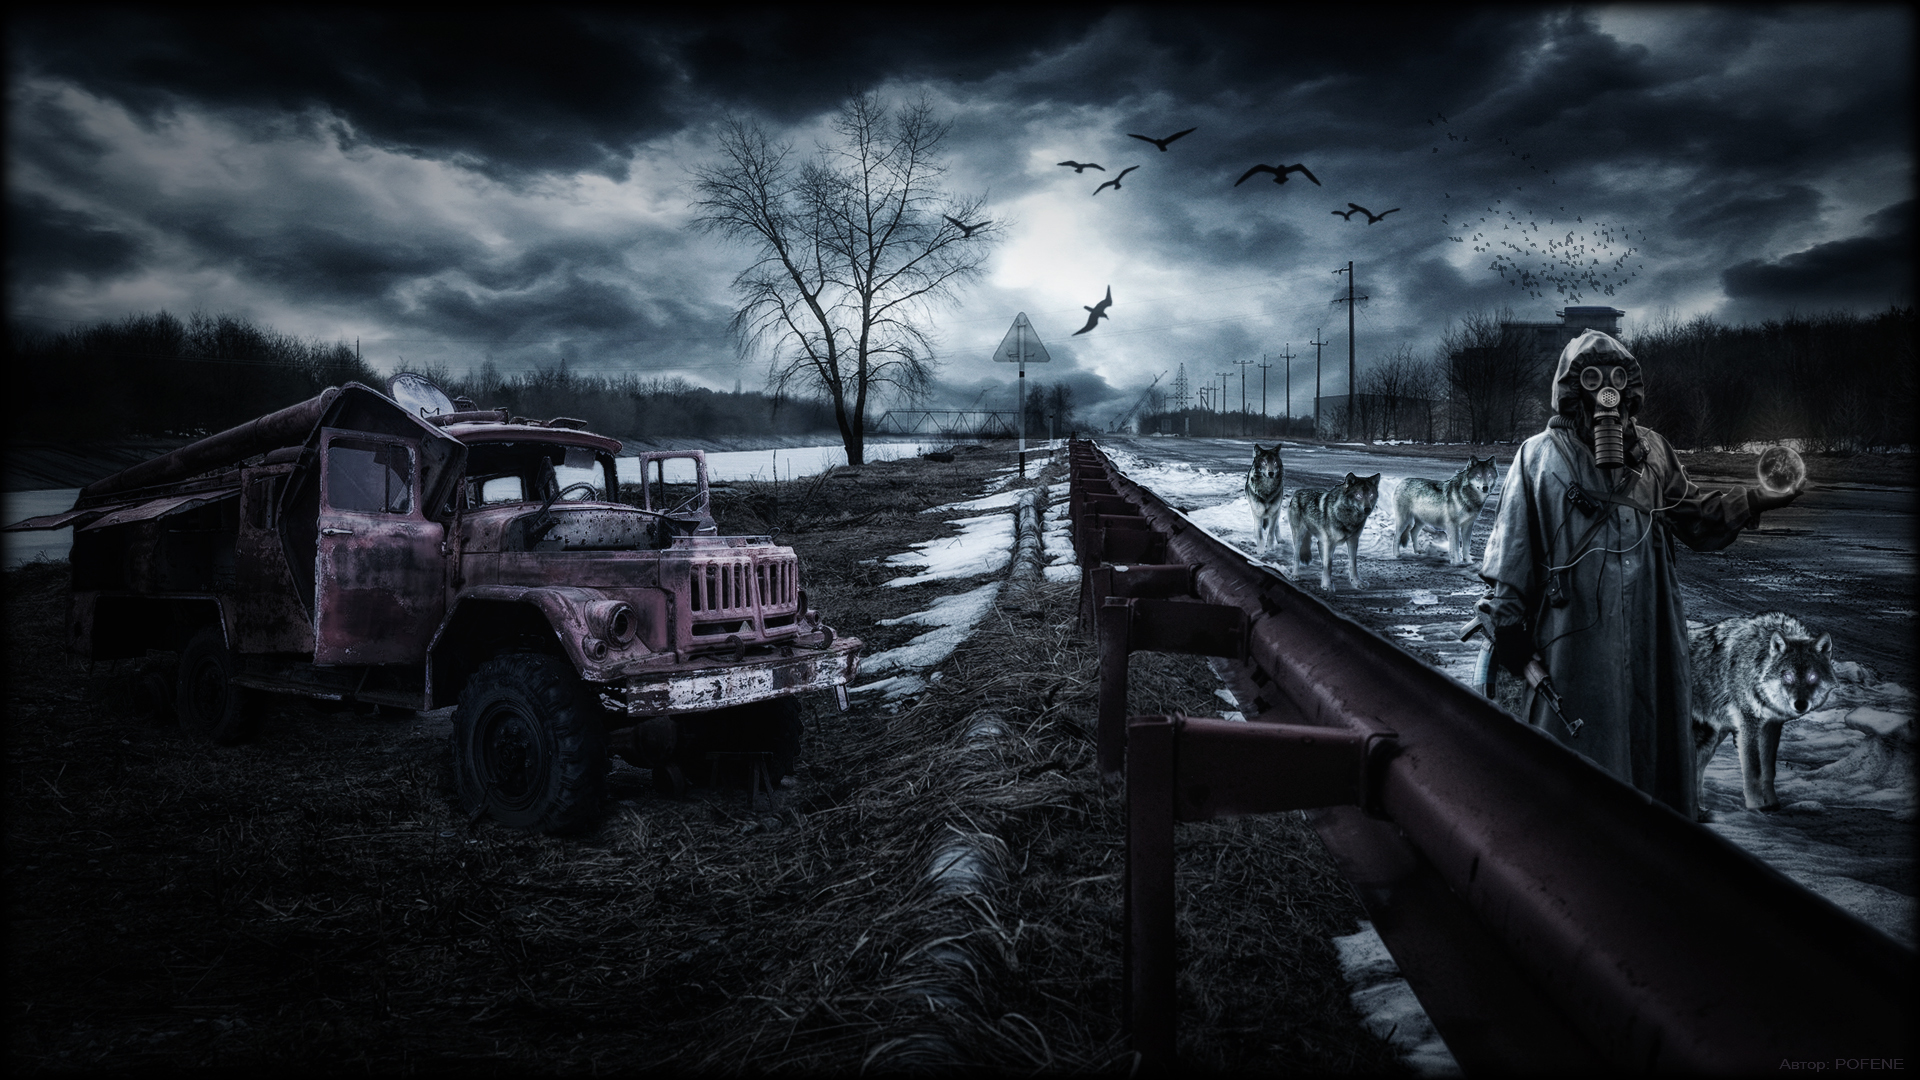 stalker, Pripyat, Chernobyl, Ukraine, Rain, Area, Night, Wolf, Wolves